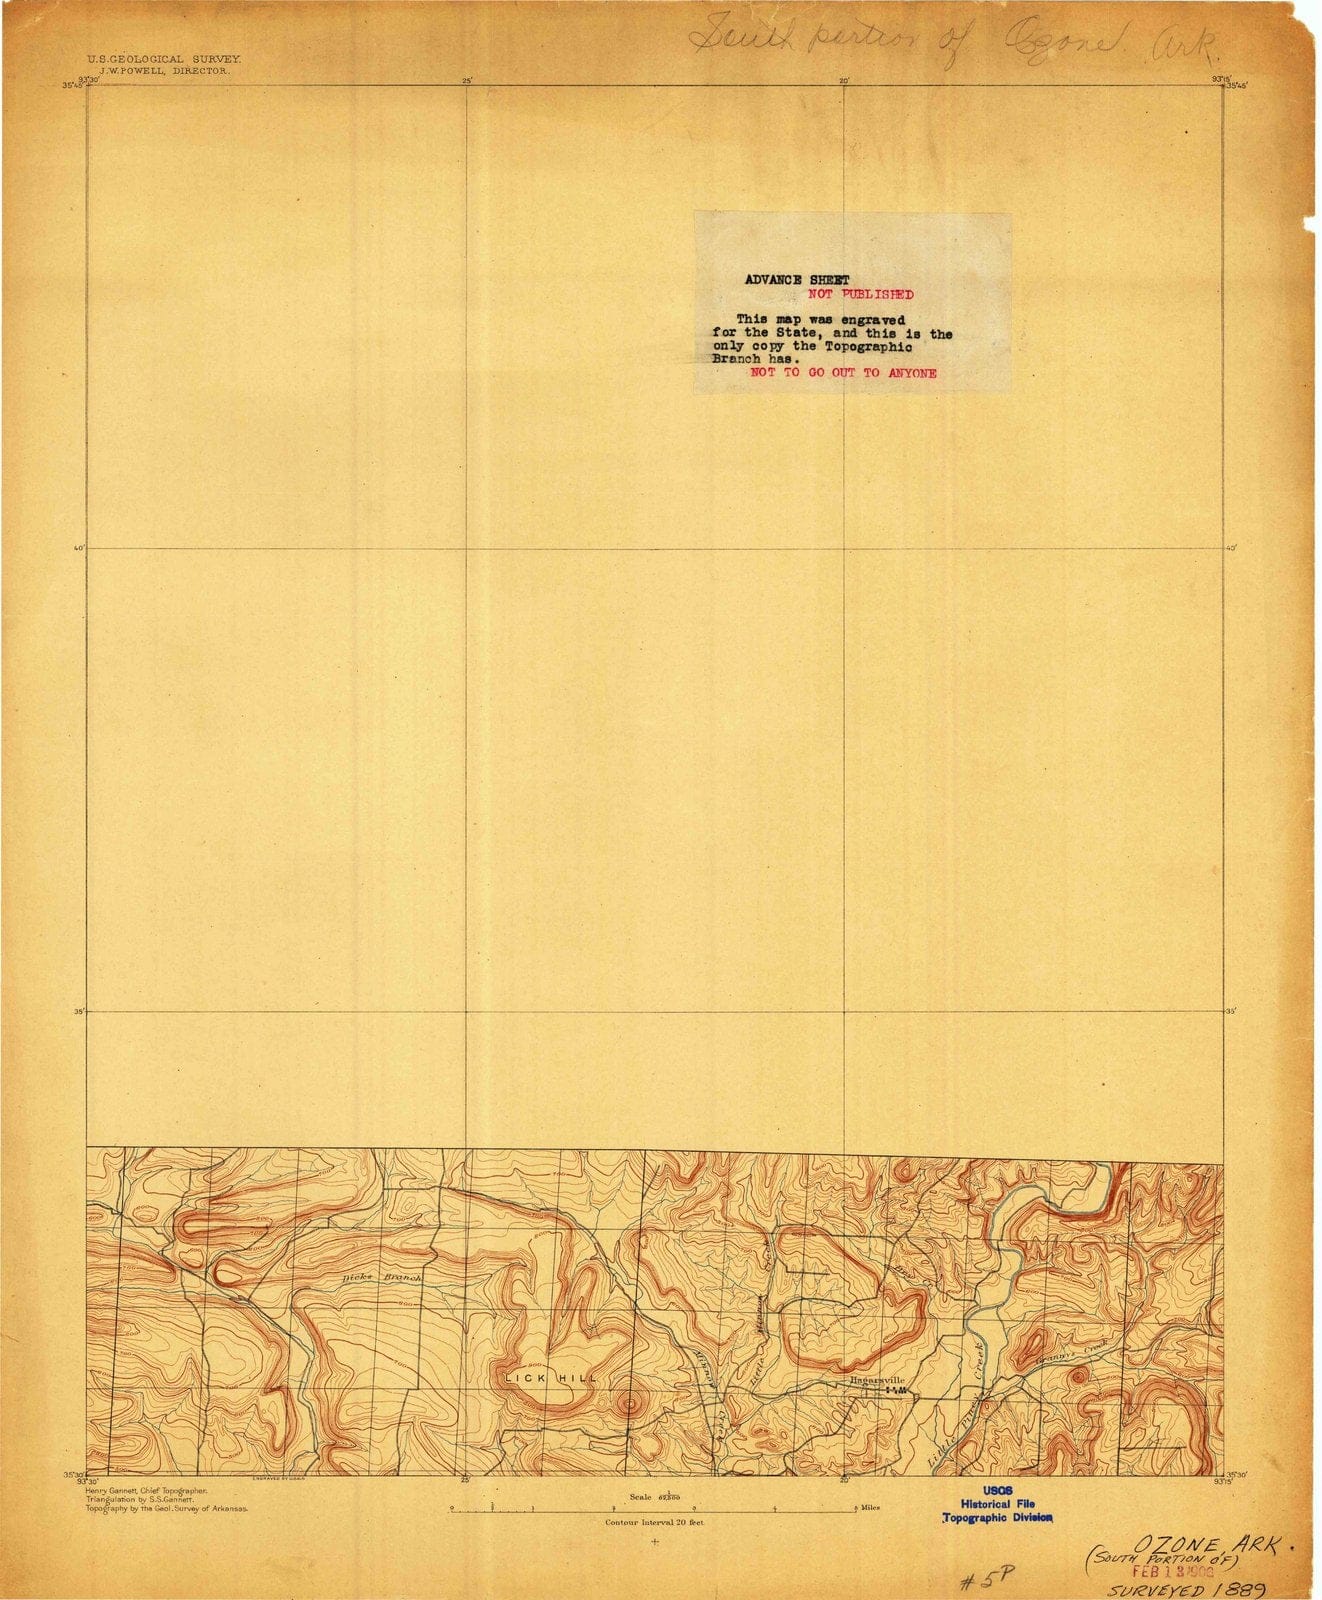 1889 Ozone, AR - Arkansas - USGS Topographic Map